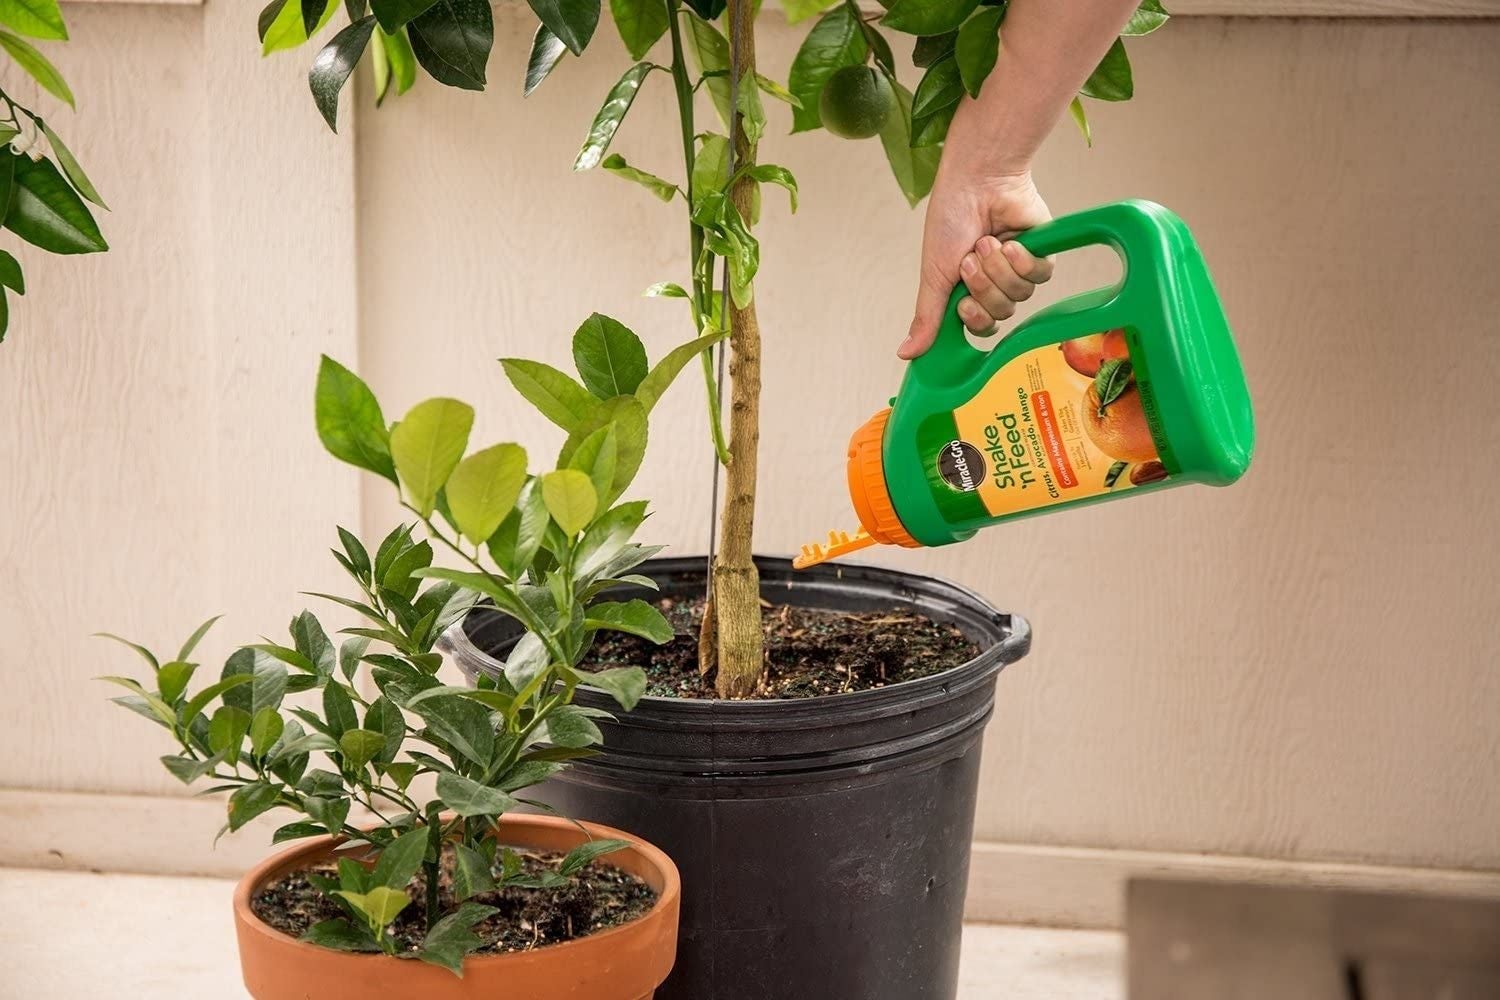 Orange Tree Fertilizer